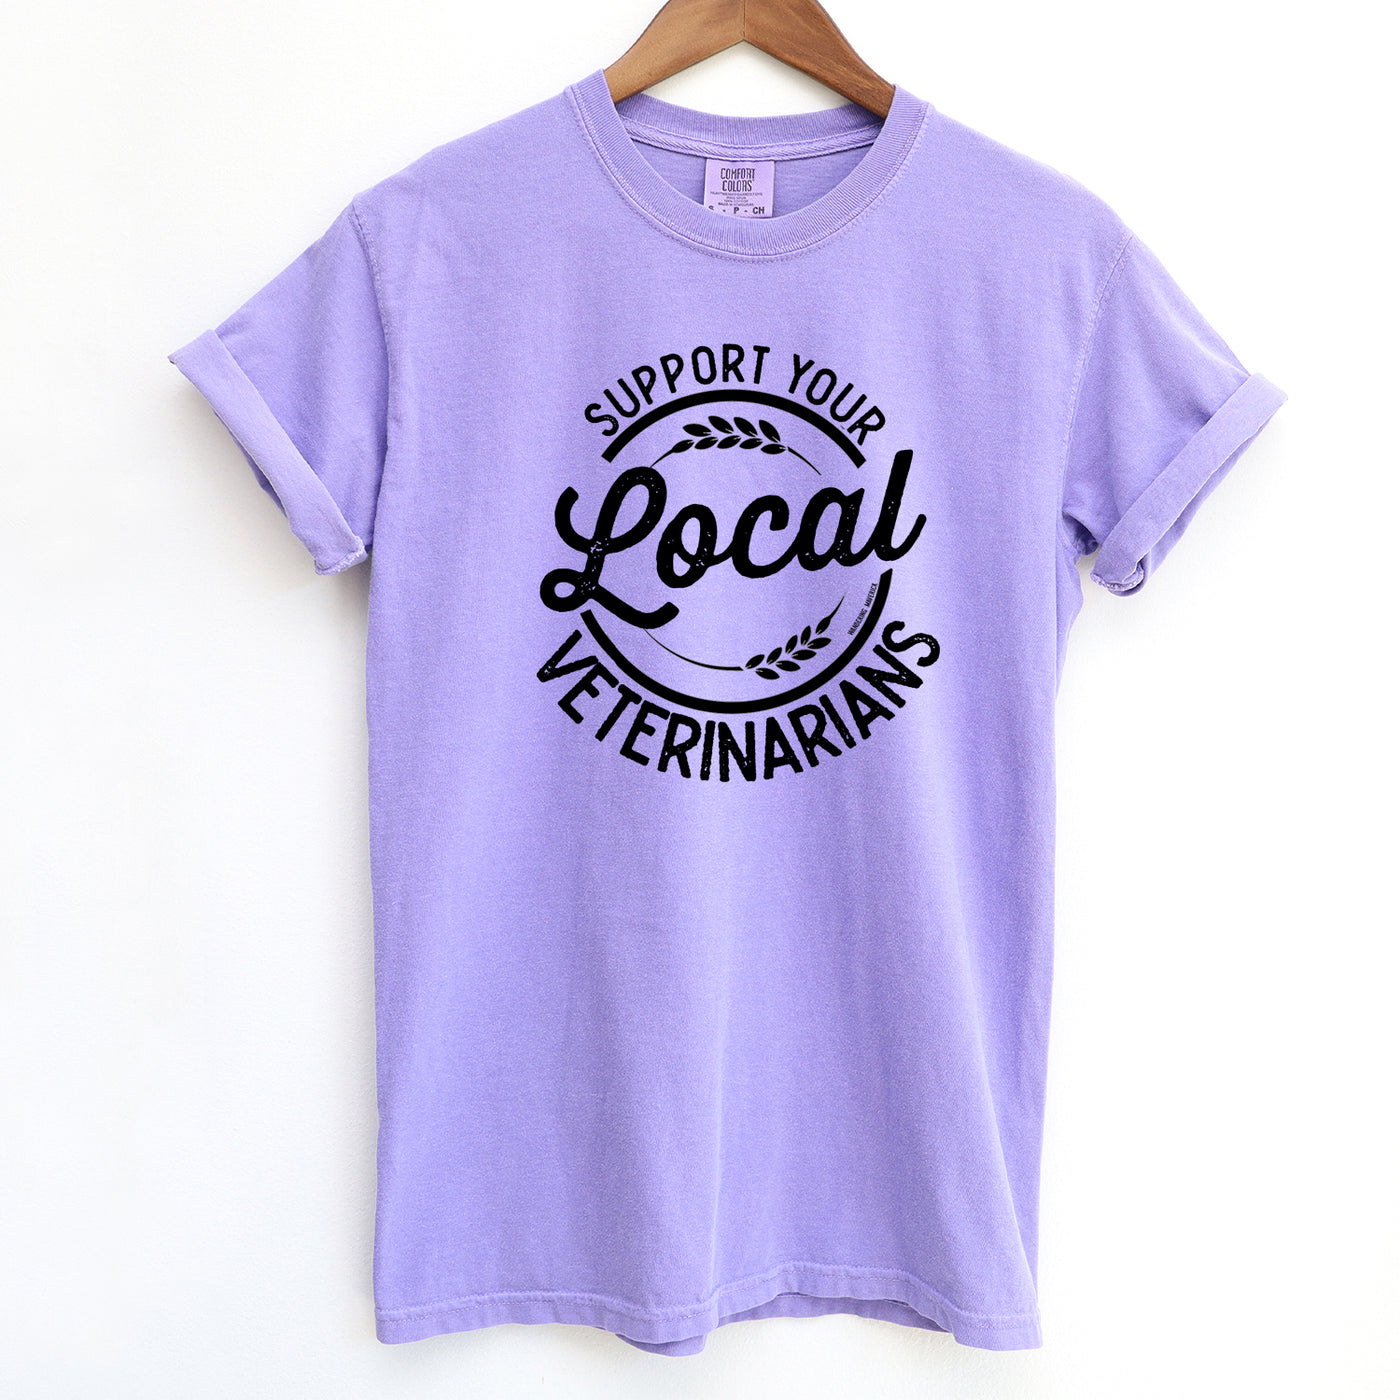 Support Your Local Veterinarians ComfortWash/ComfortColor T-Shirt (S-4XL) - Multiple Colors!